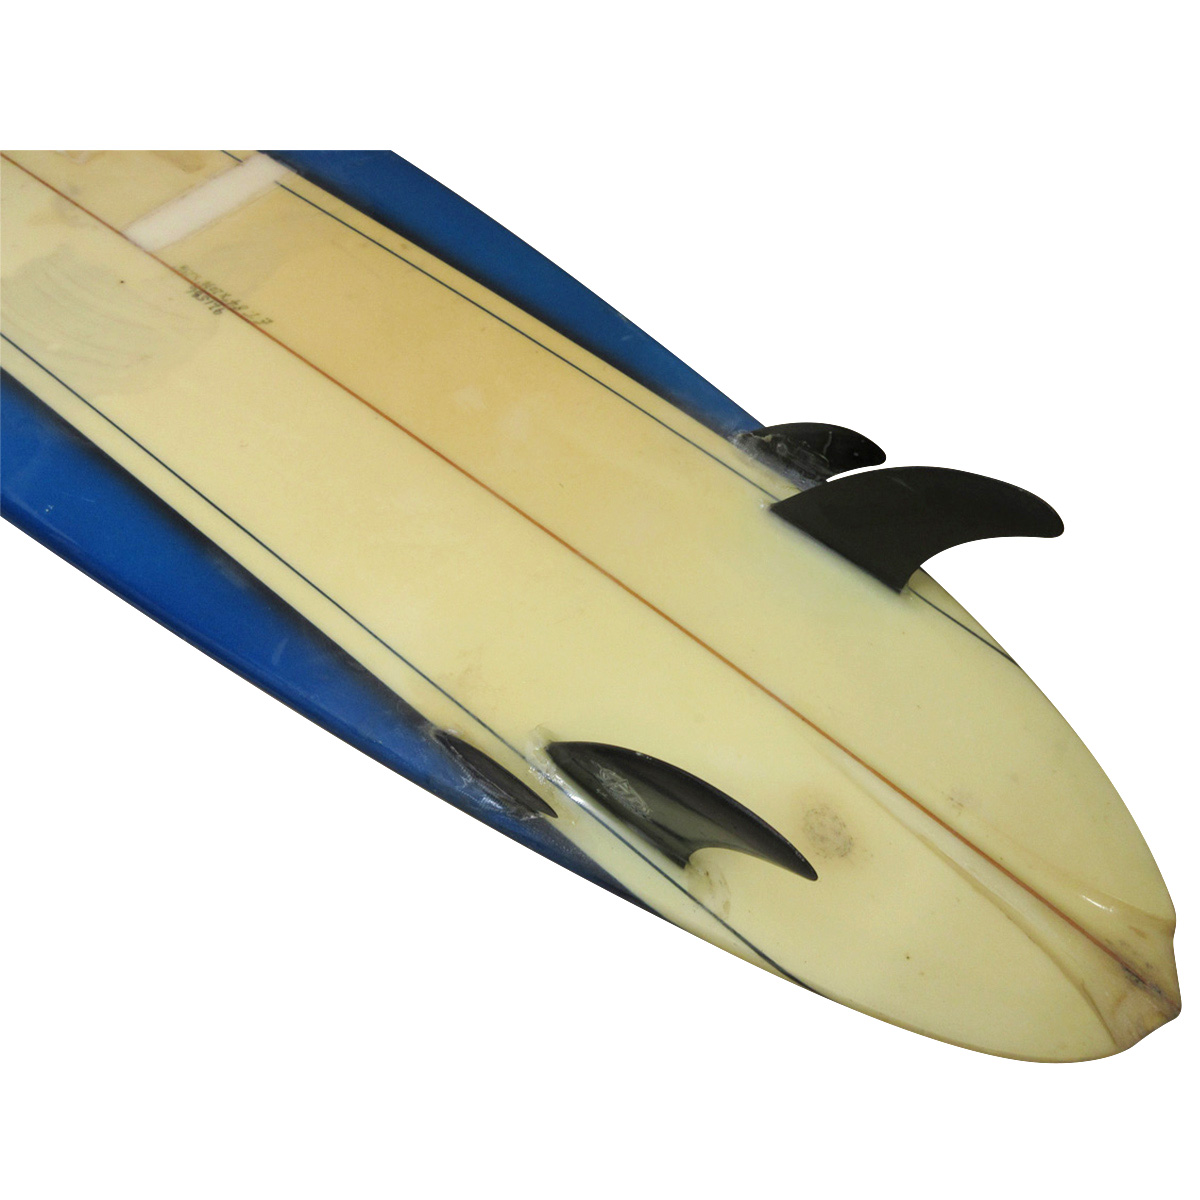 BLUE HAWAII SURFBOARDS / TWINZER 8'4 Shaped by Ernie Tanaka